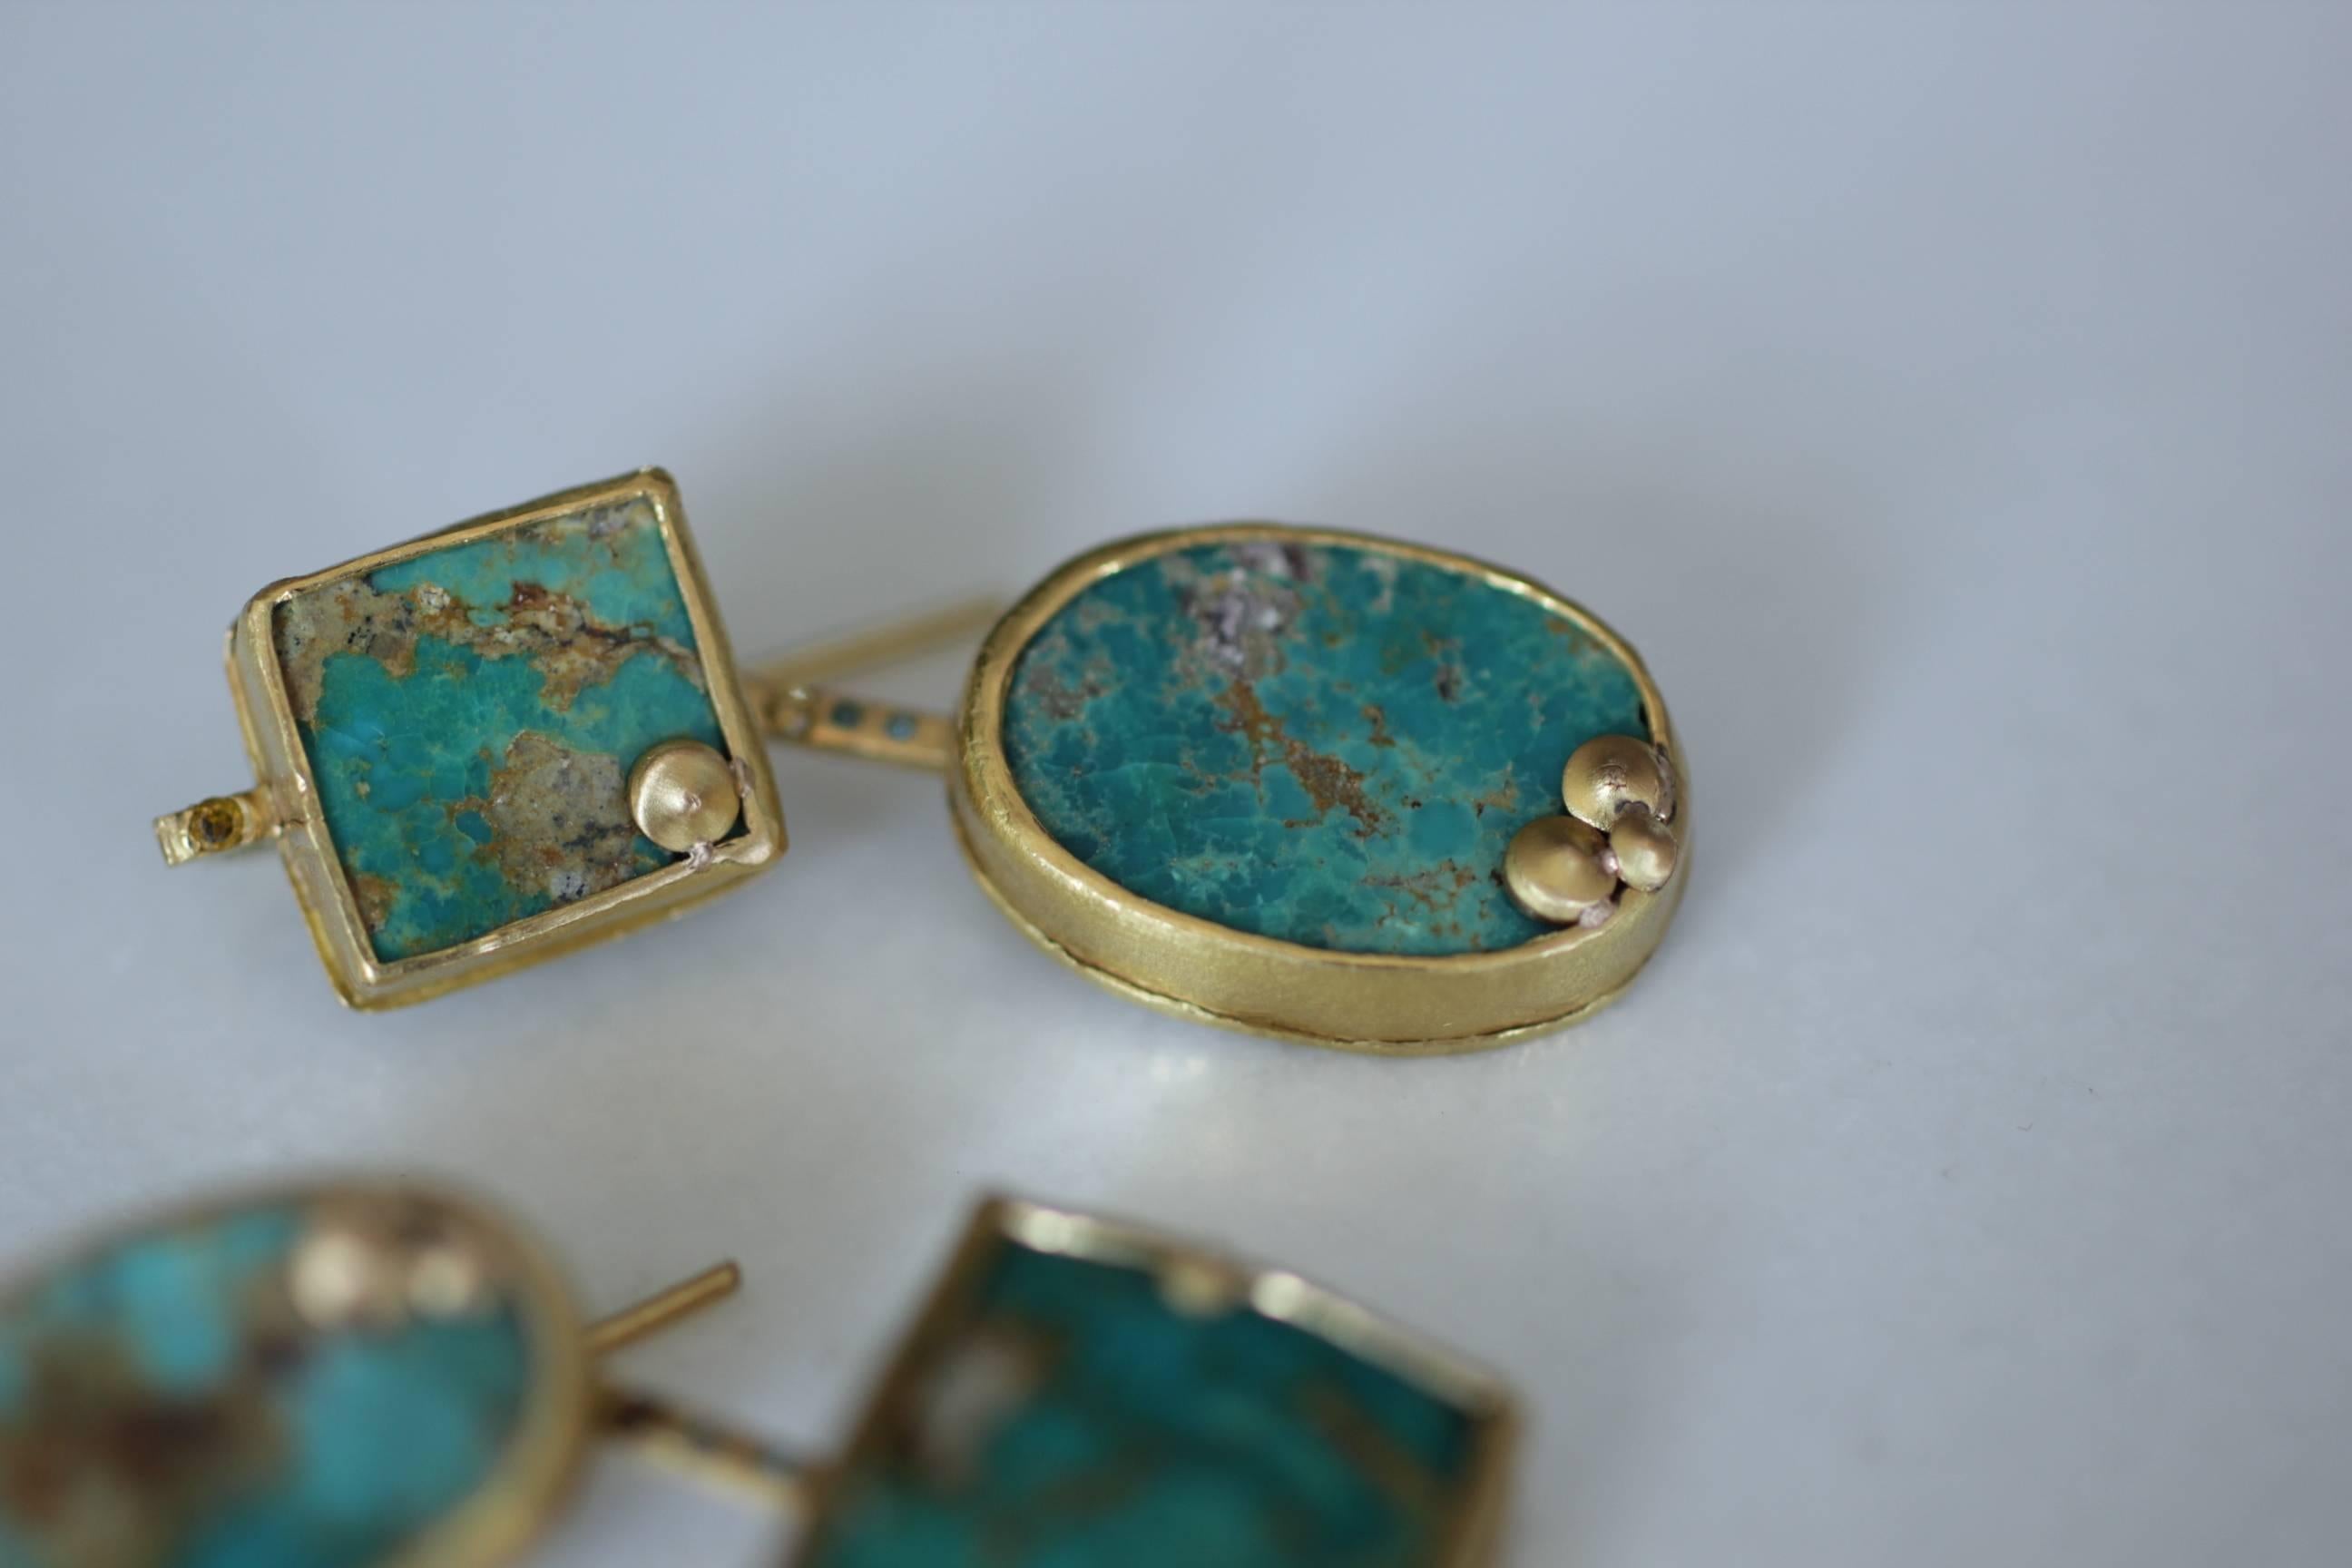 22Karat-21Karat Gold Persian Turquoise and Diamond Earrings Handmade Jewelry 2